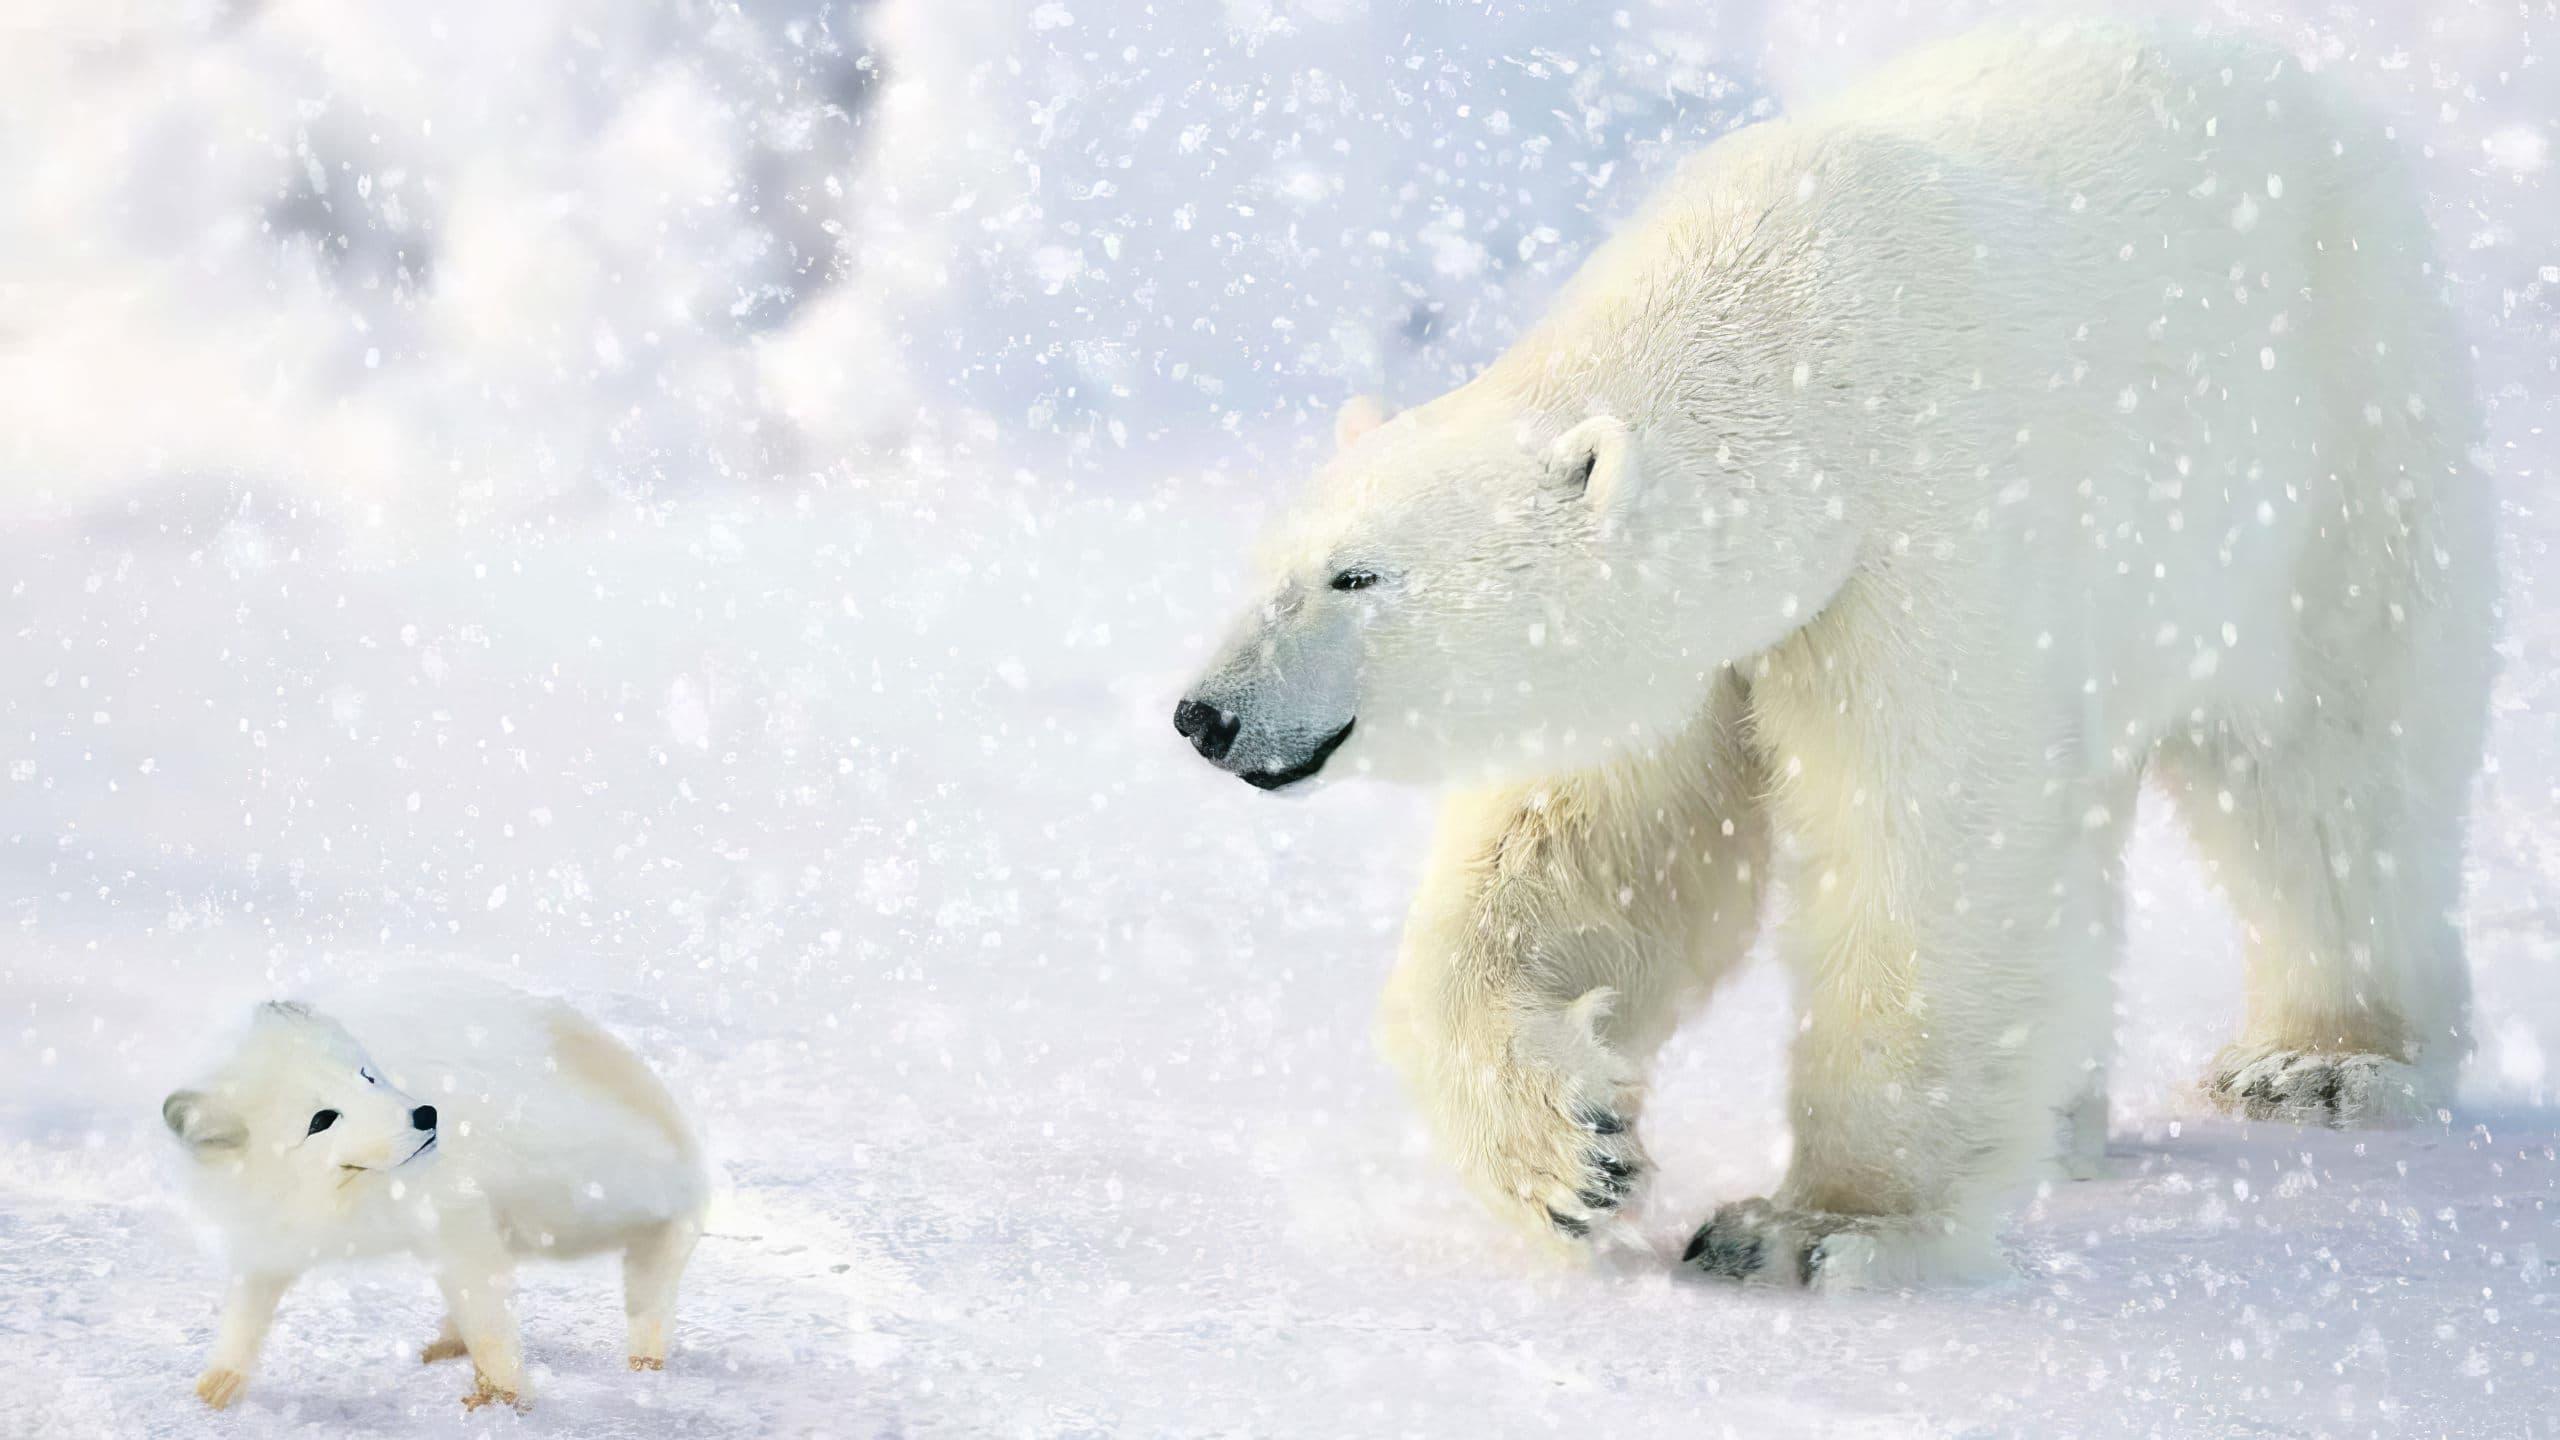 The Great Polar Bear Adventure backdrop